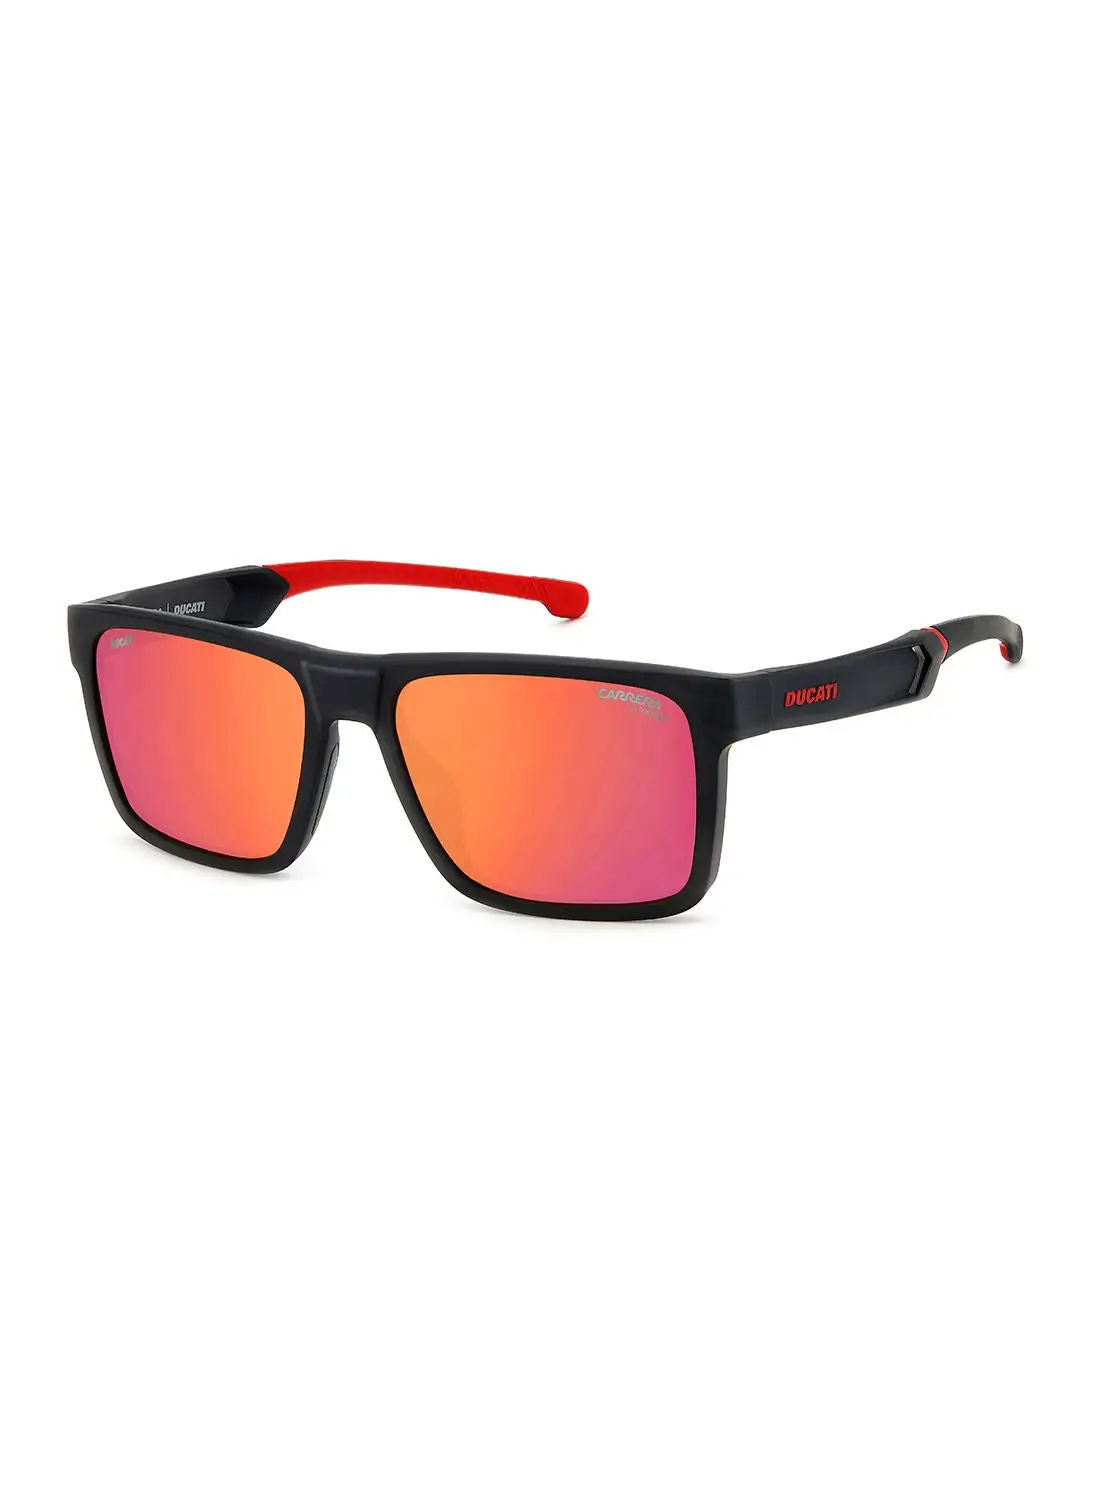 Carrera Men's UV Protection Rectangular Sunglasses - Carduc 021/S Black Red 55 - Lens Size: 55 Mm